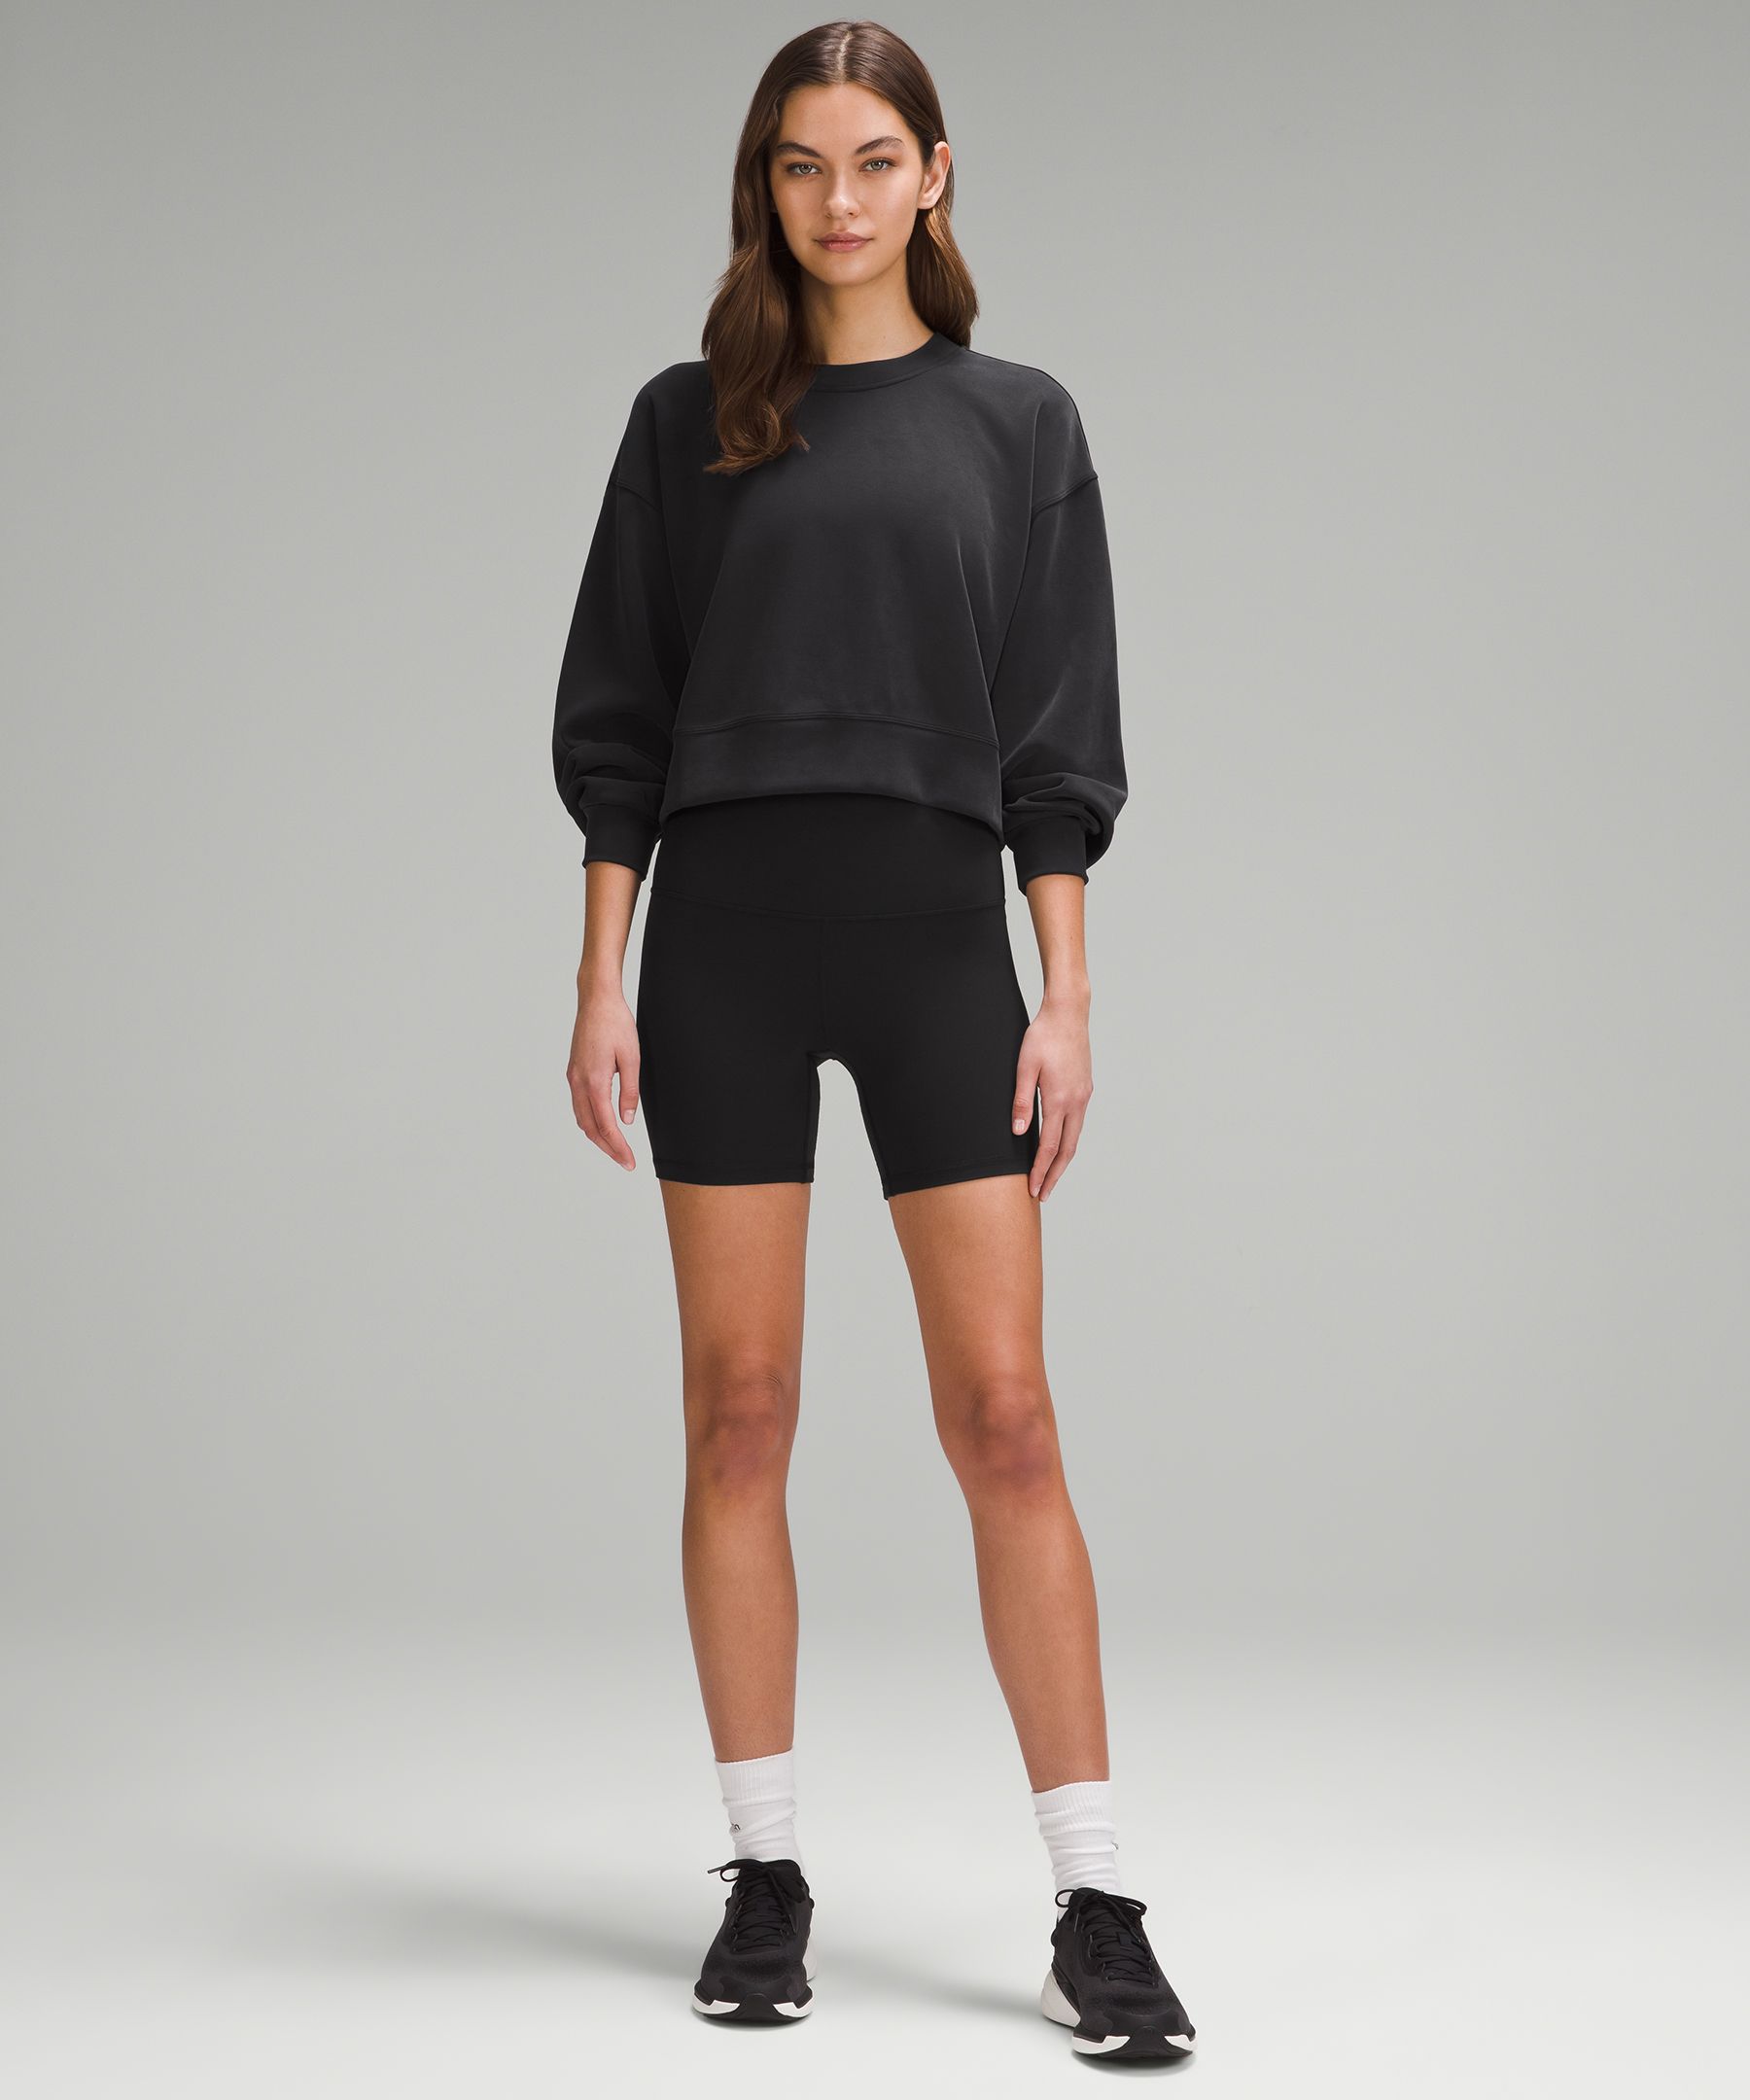 Lululemon Women’s Wool Whenever Crew Black sweatshirt top crop Sherpa size 4